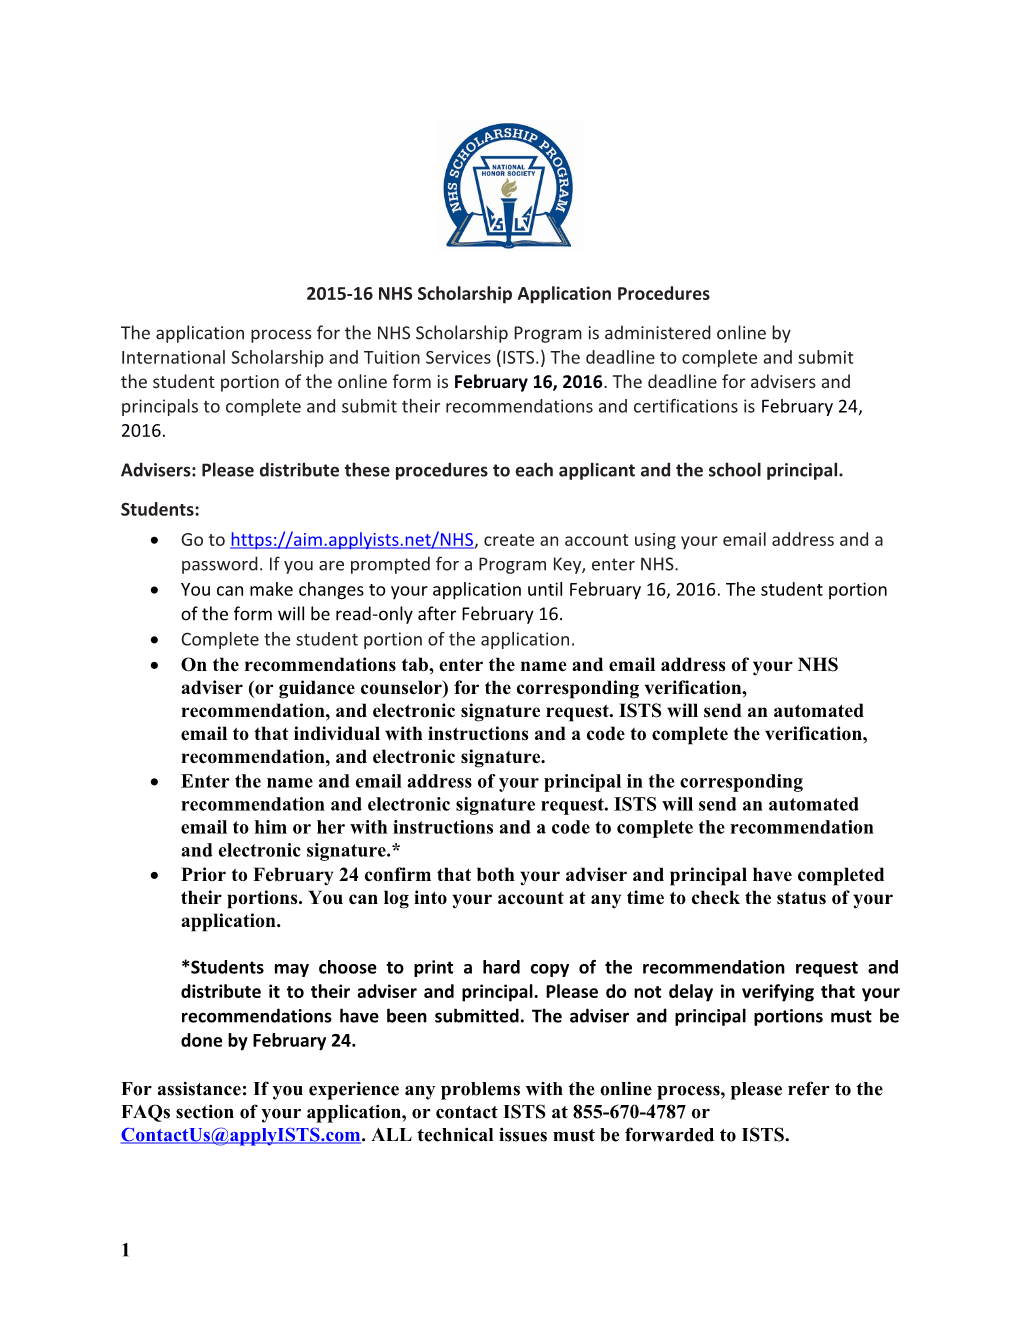 2015-16NHS Scholarship Application Procedures